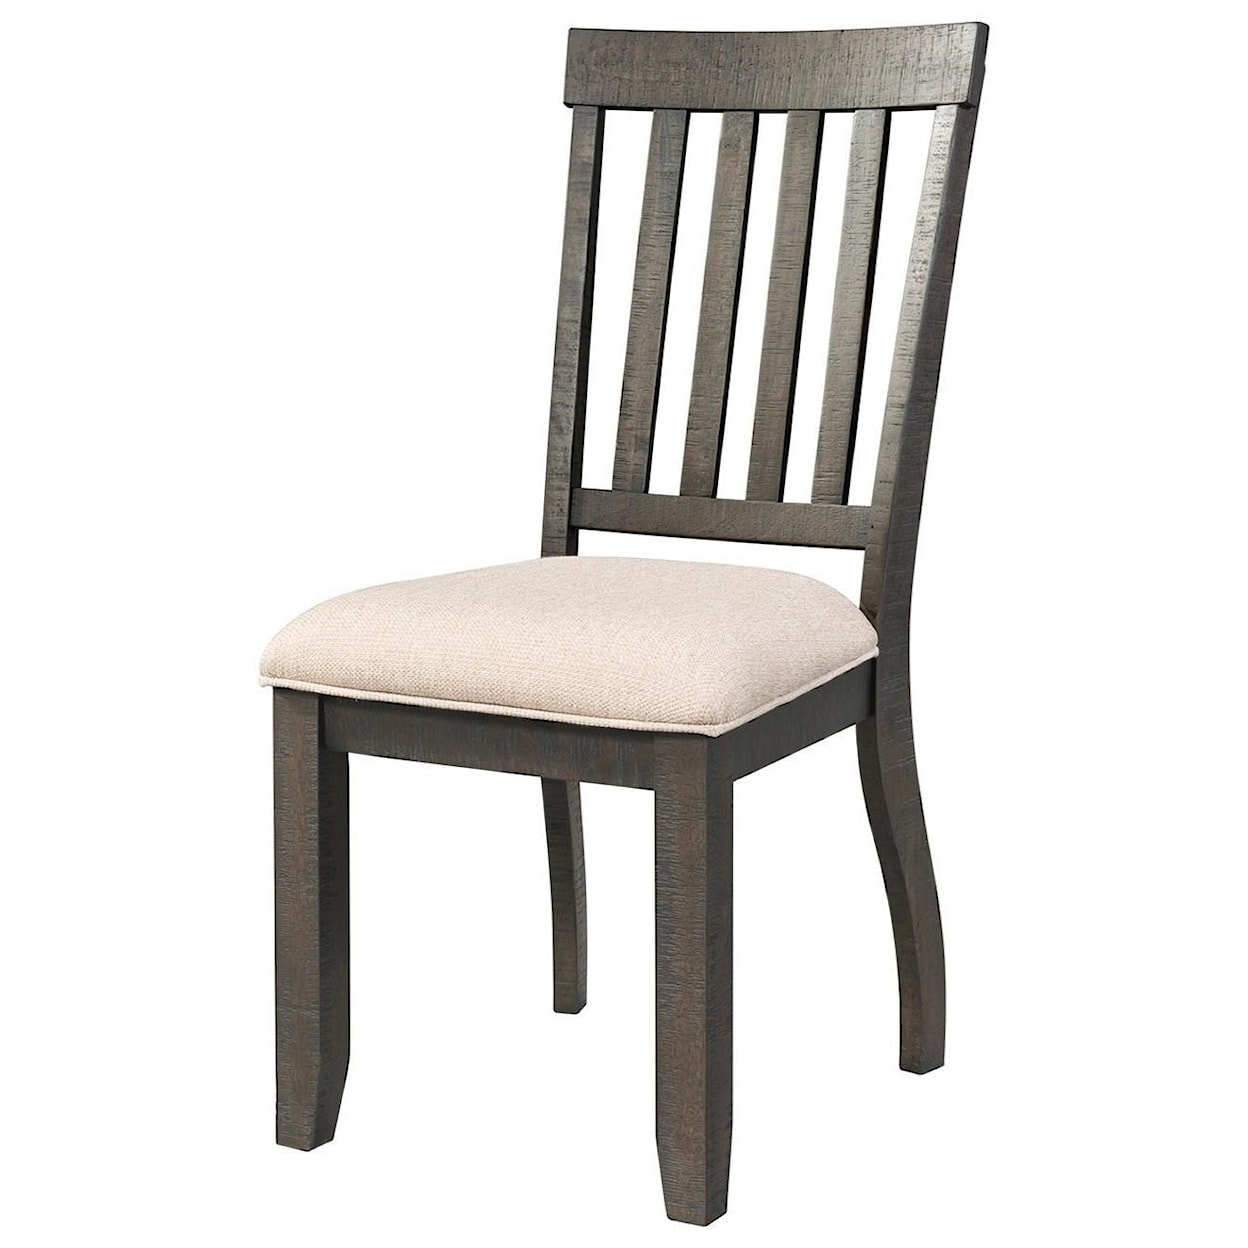 Elements International Stone Side Chair